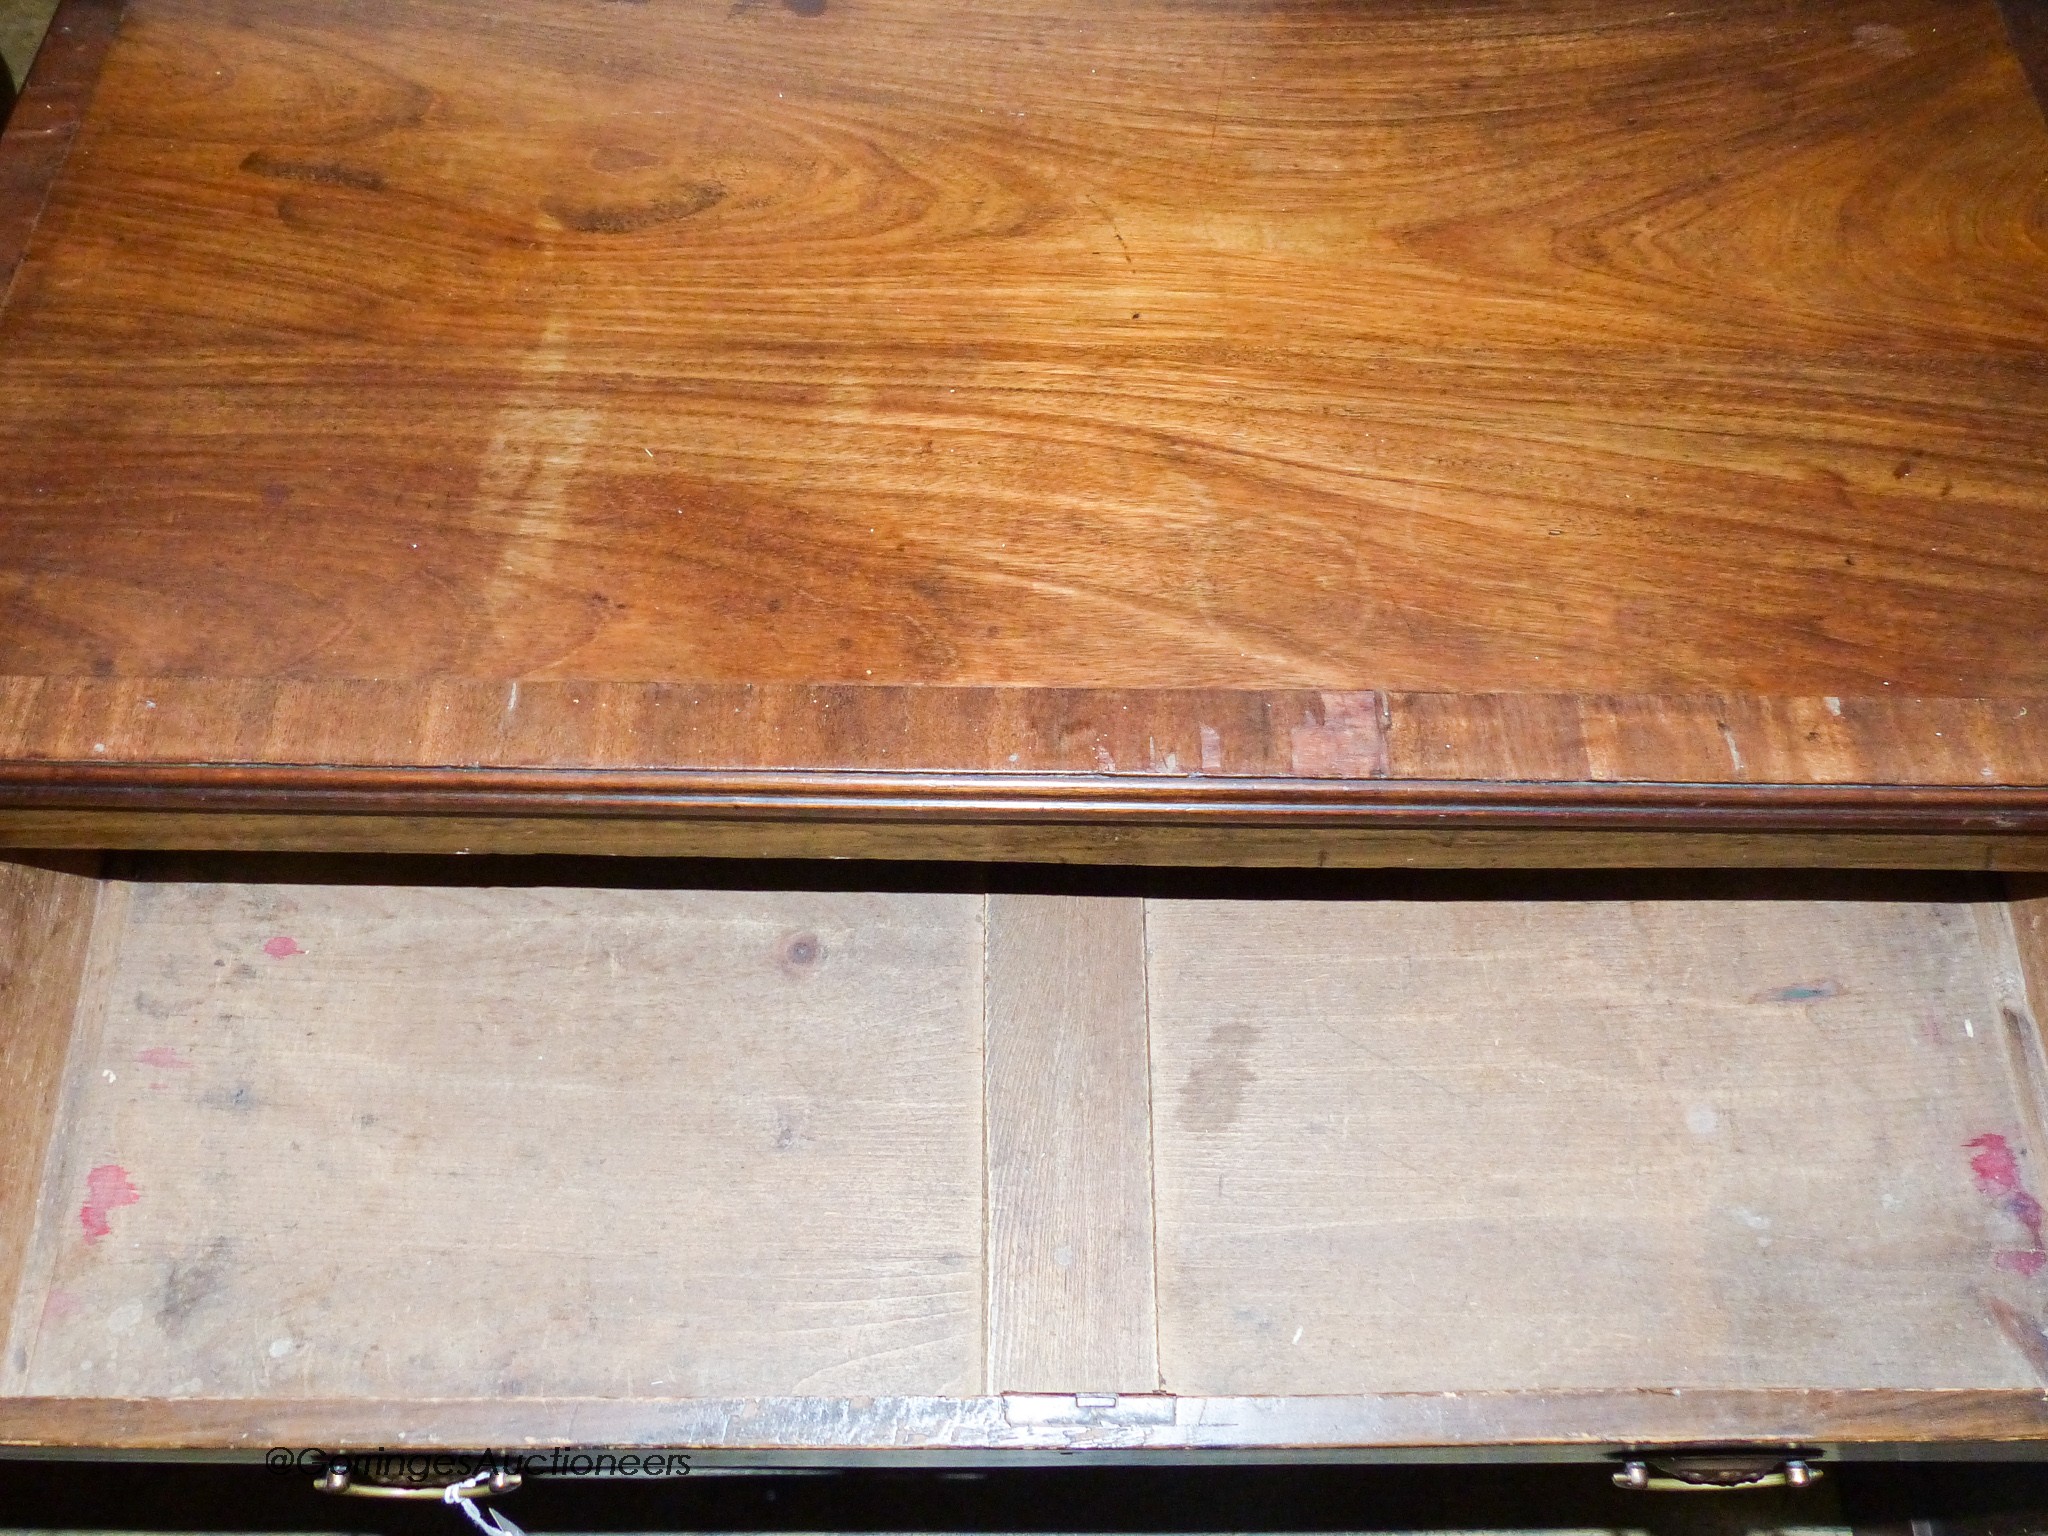 A 19th century mahogany three drawer chest, width 90cm, depth 41cm, height 78cm